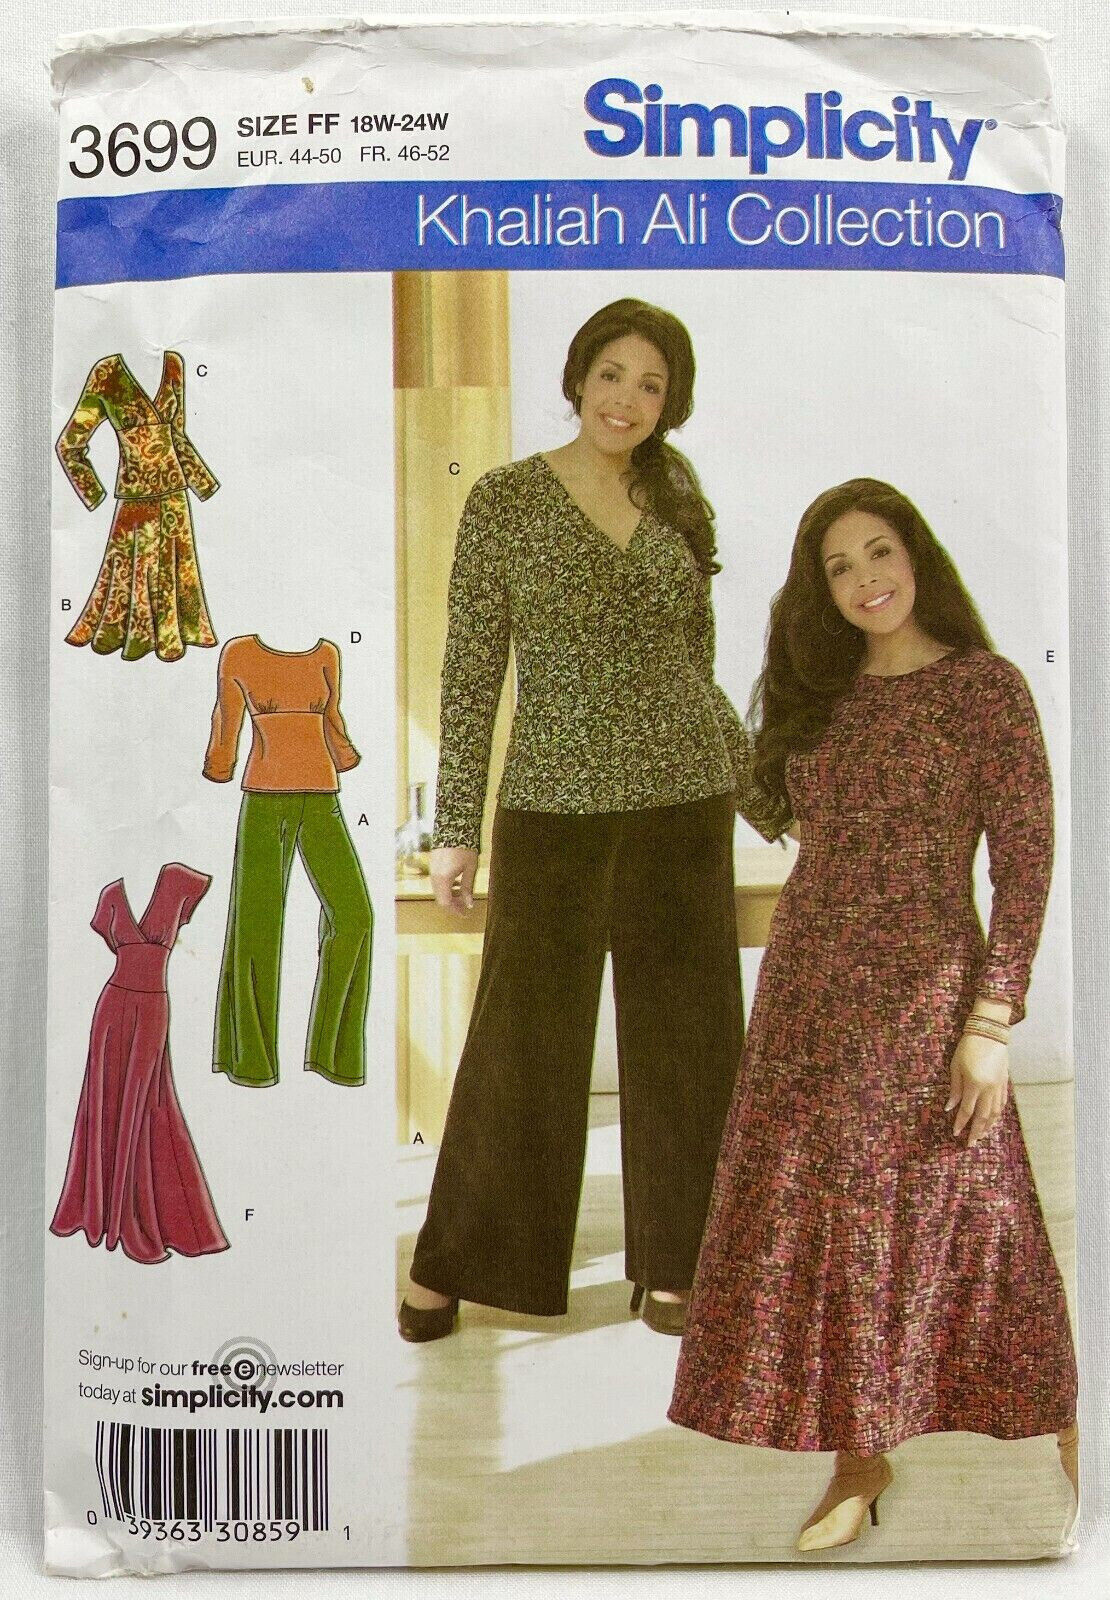 2007 Simplicity Sewing Pattern 3699 Womens Top Dress Pants Skirt  Sz 18-24 10386